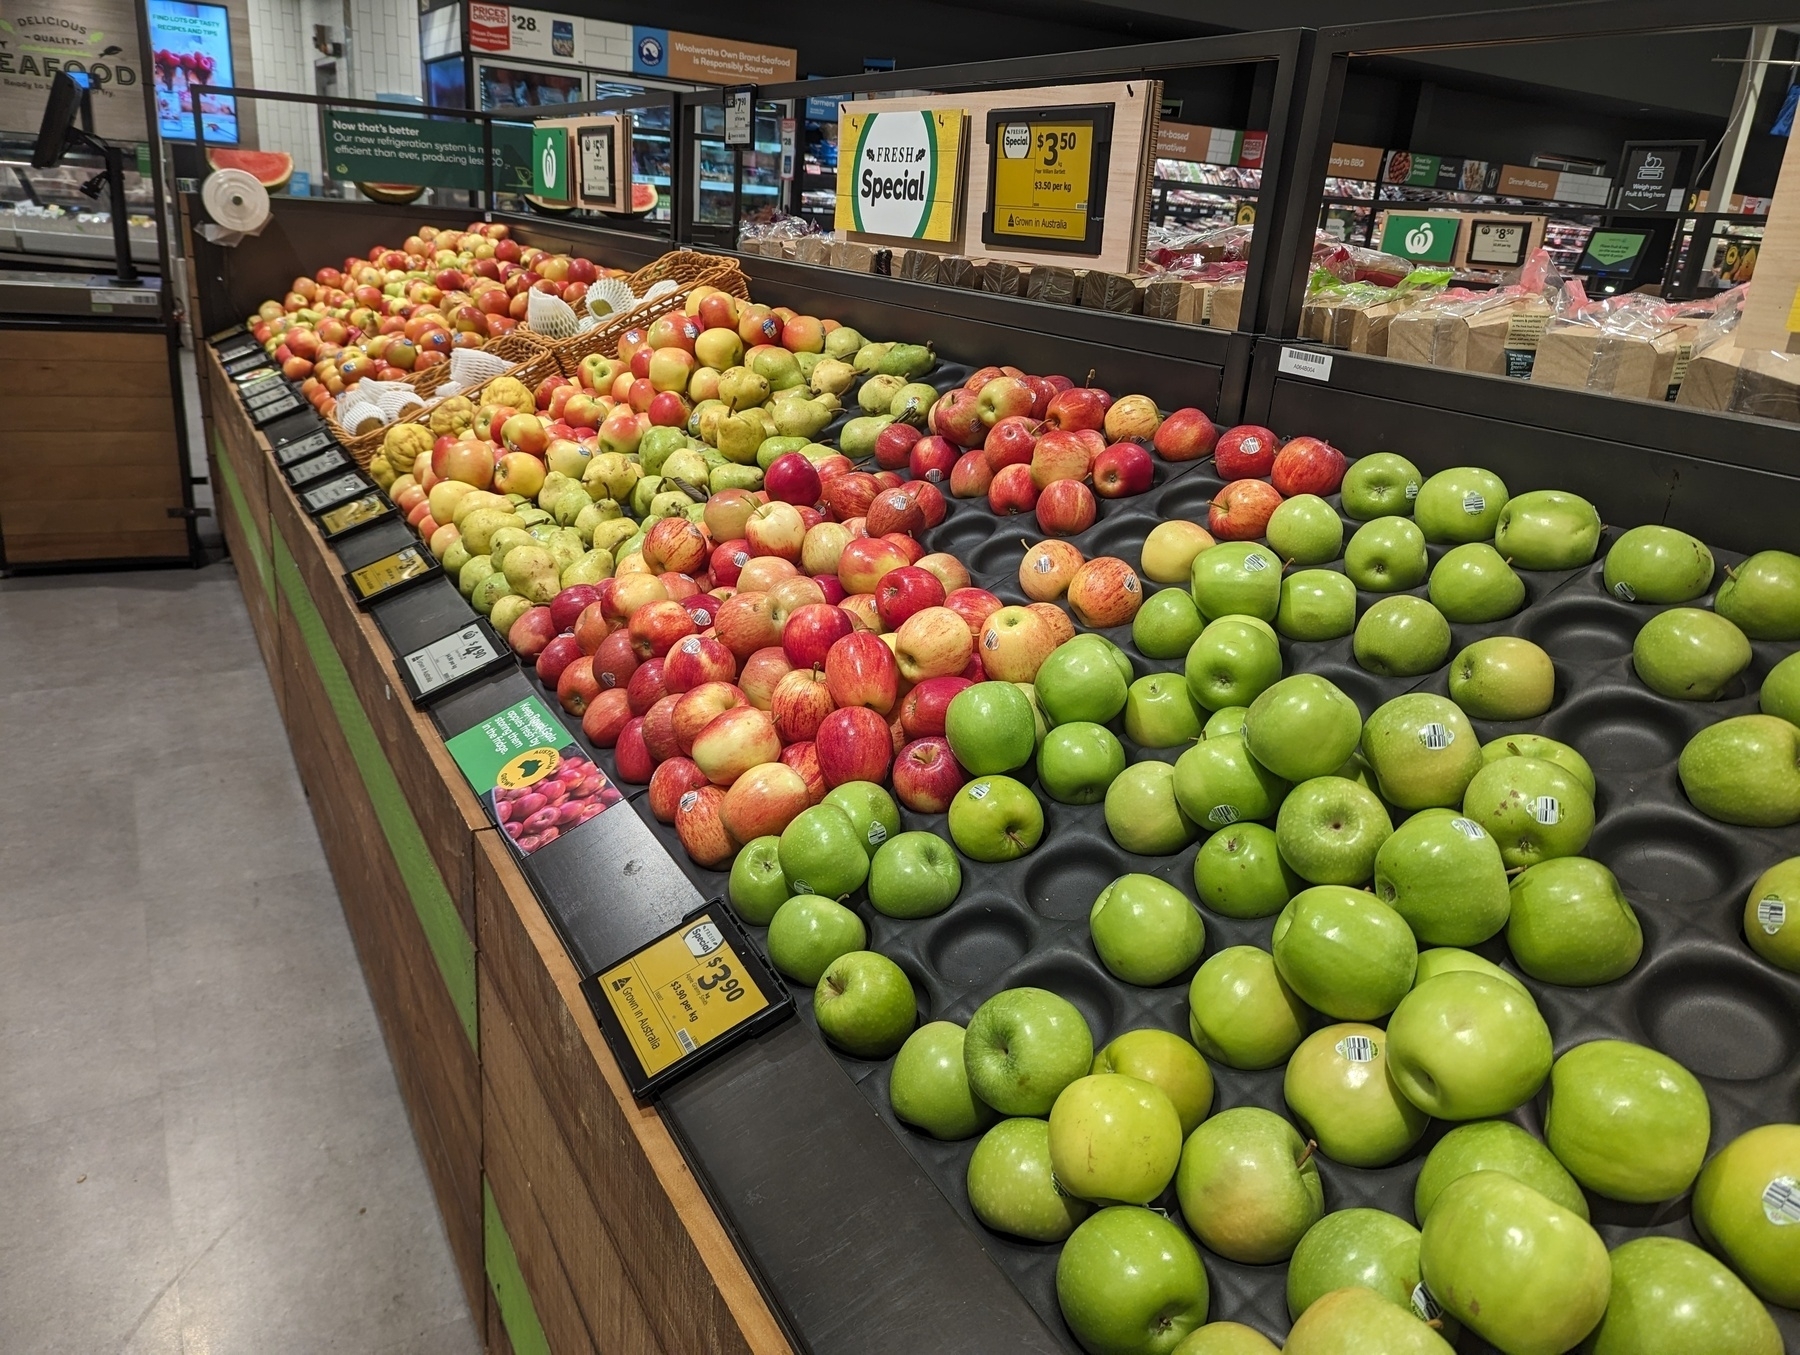 Supermarket display of apples for sale.